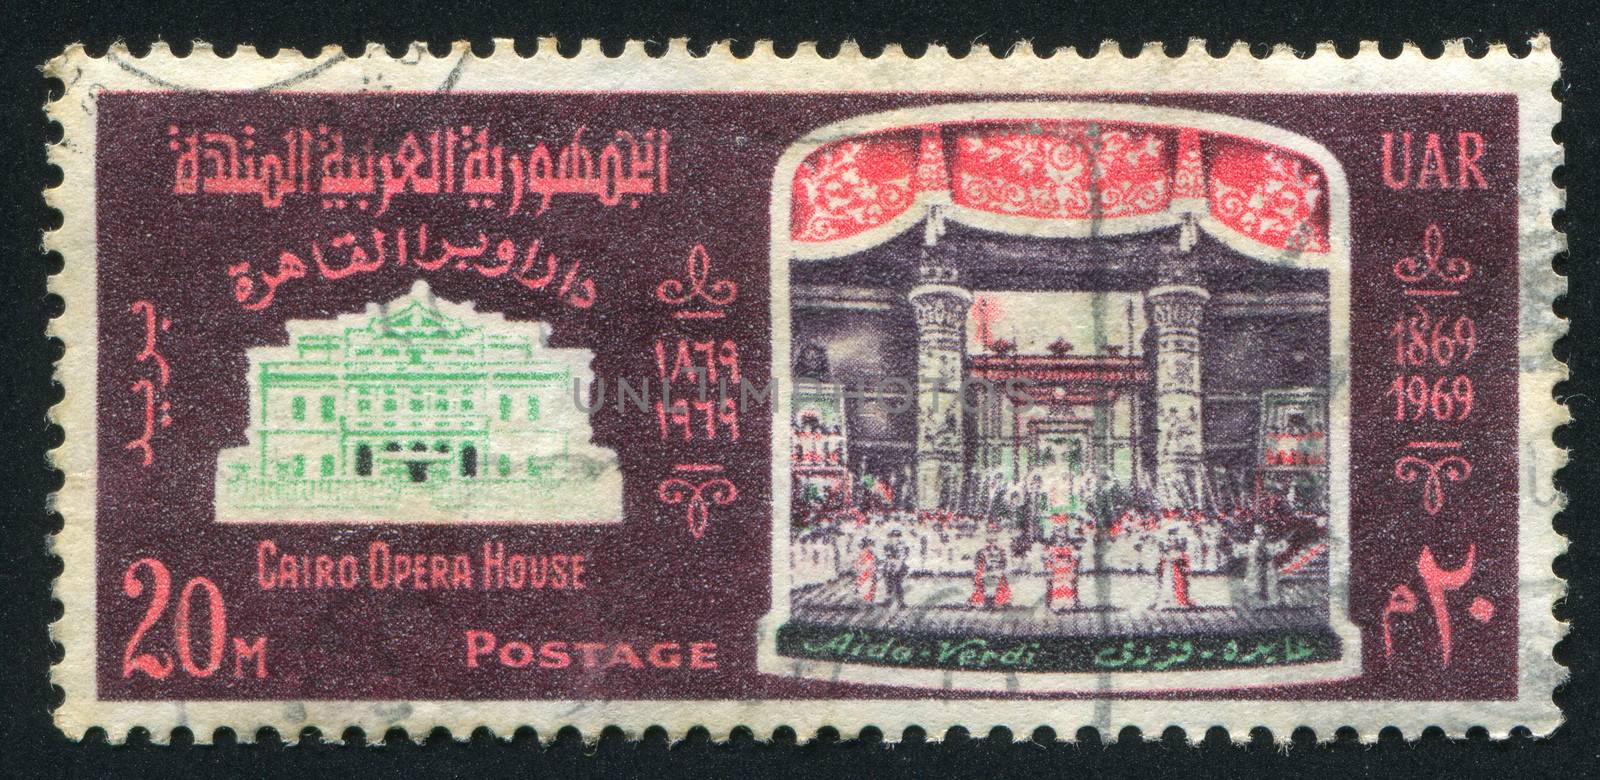 EGYPT - CIRCA 1969: stamp printed by Egypt, shows Cairo Opera House, scene, circa 1969